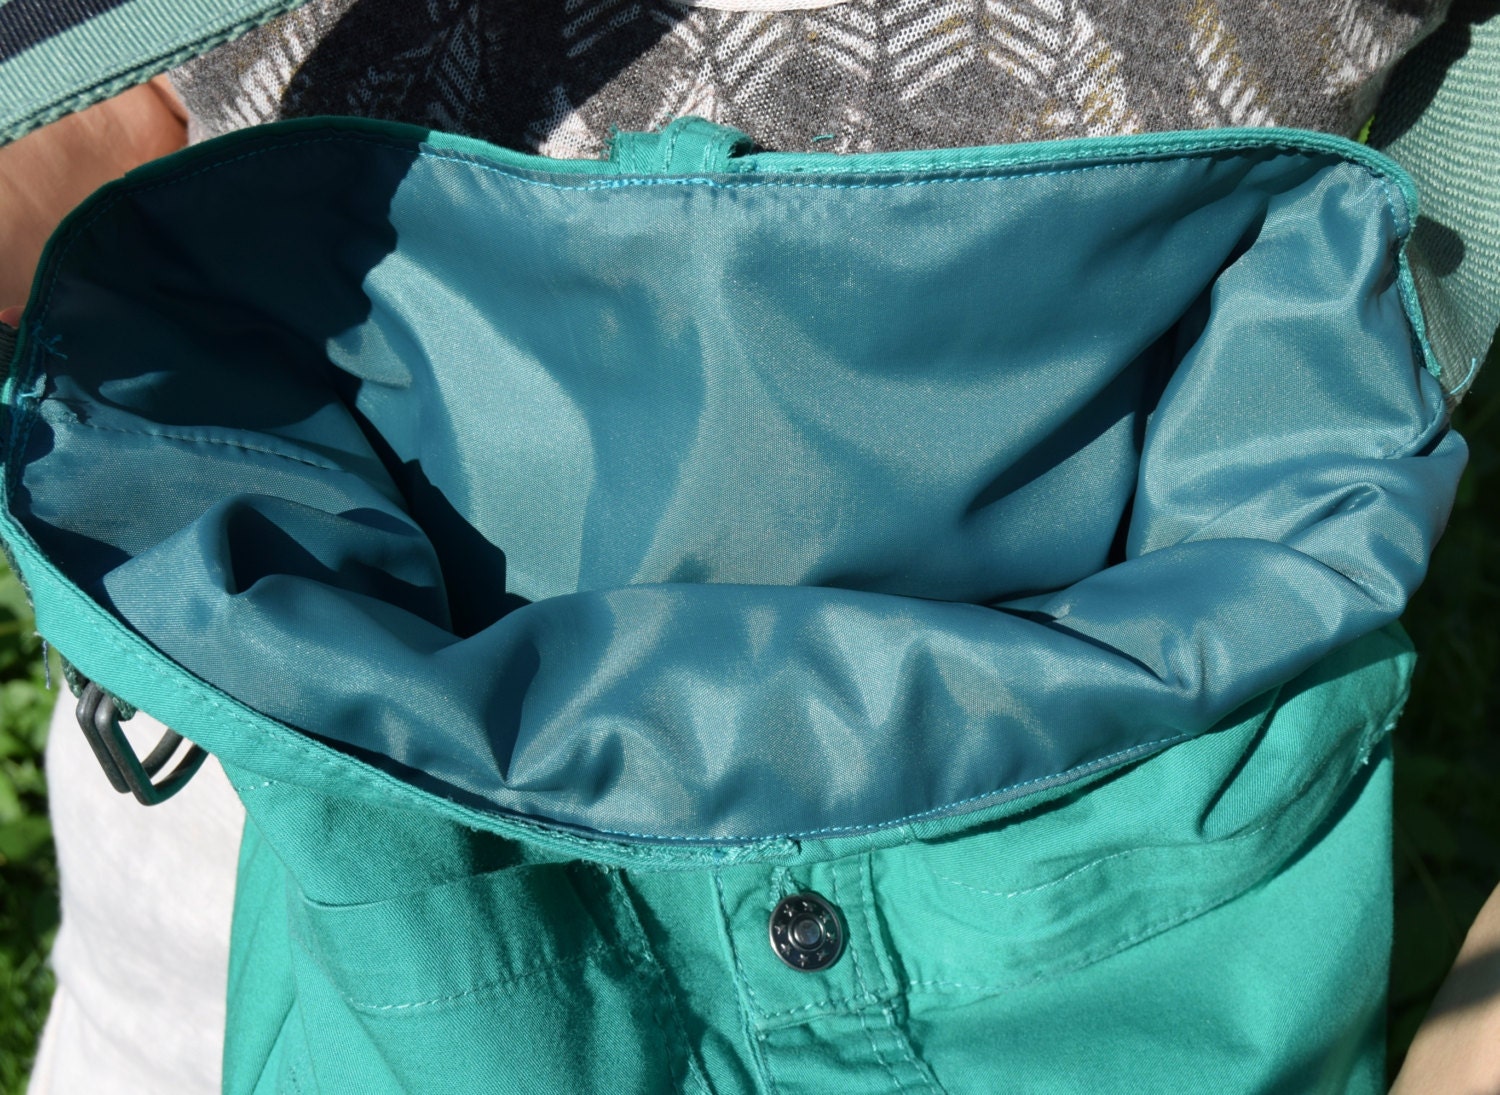 Turquoise Denim Bag / Green Blue Jeans Bag / Recycled Denim Handbag ...